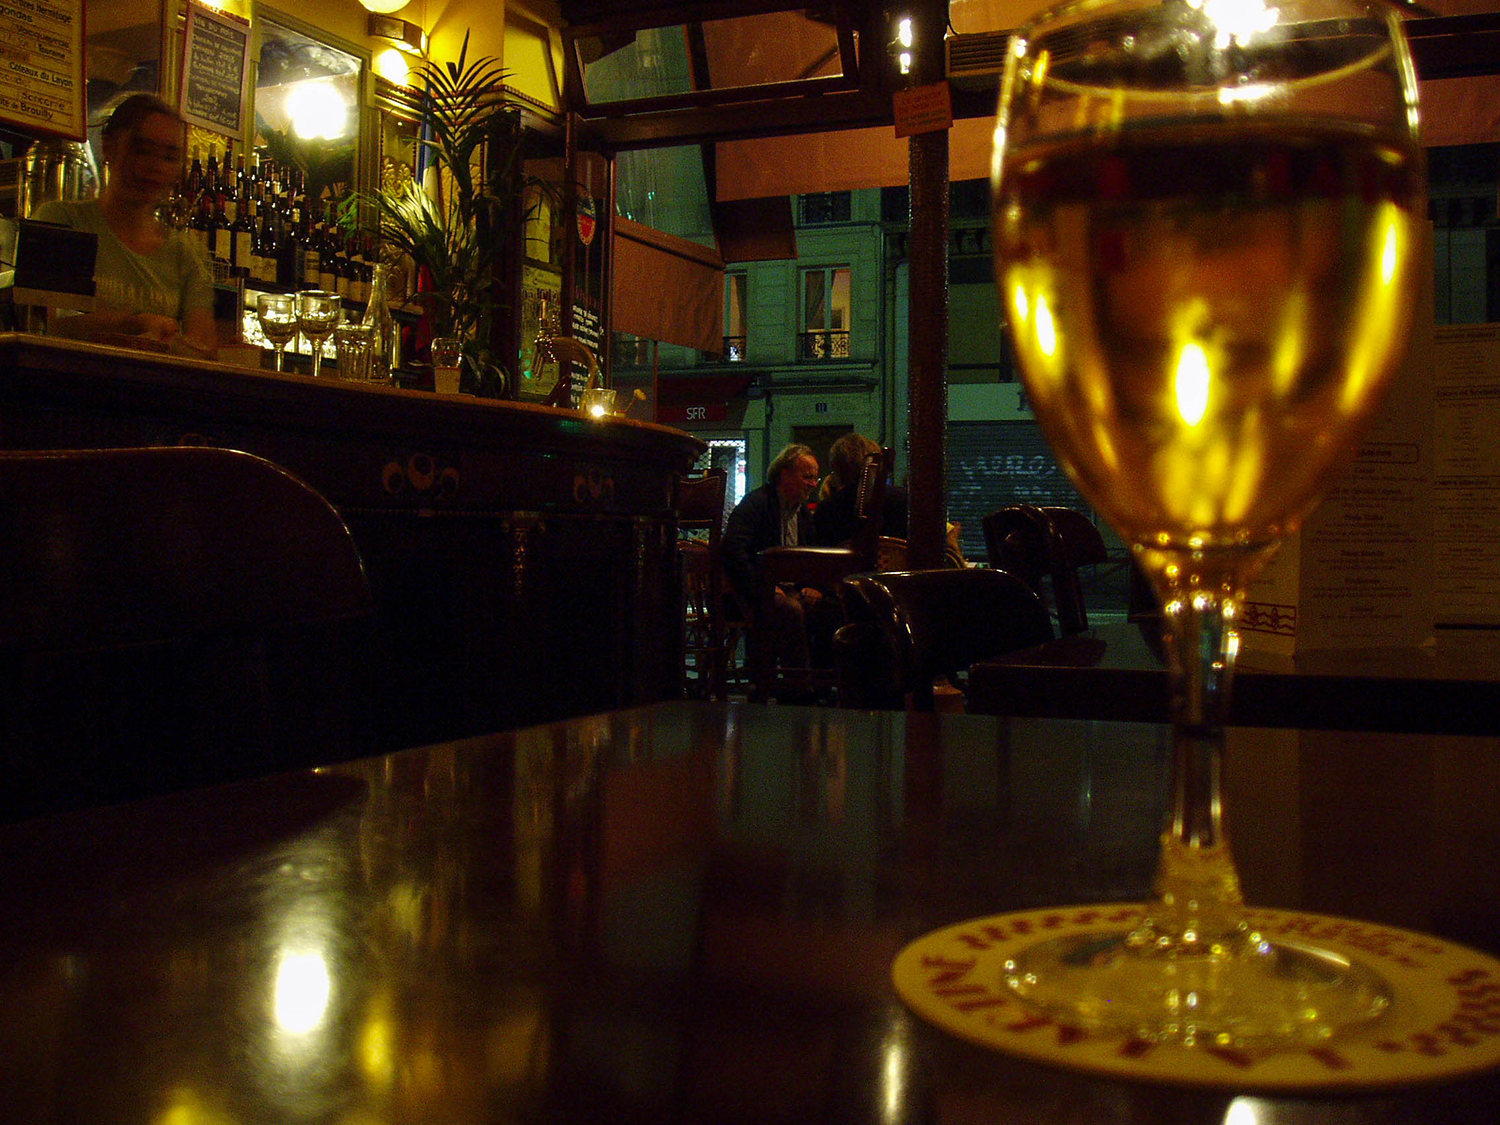 <p>A night at a cosy bar in the Marais. <br /></p>
<p>One of my favourite photos (of mine).</p>